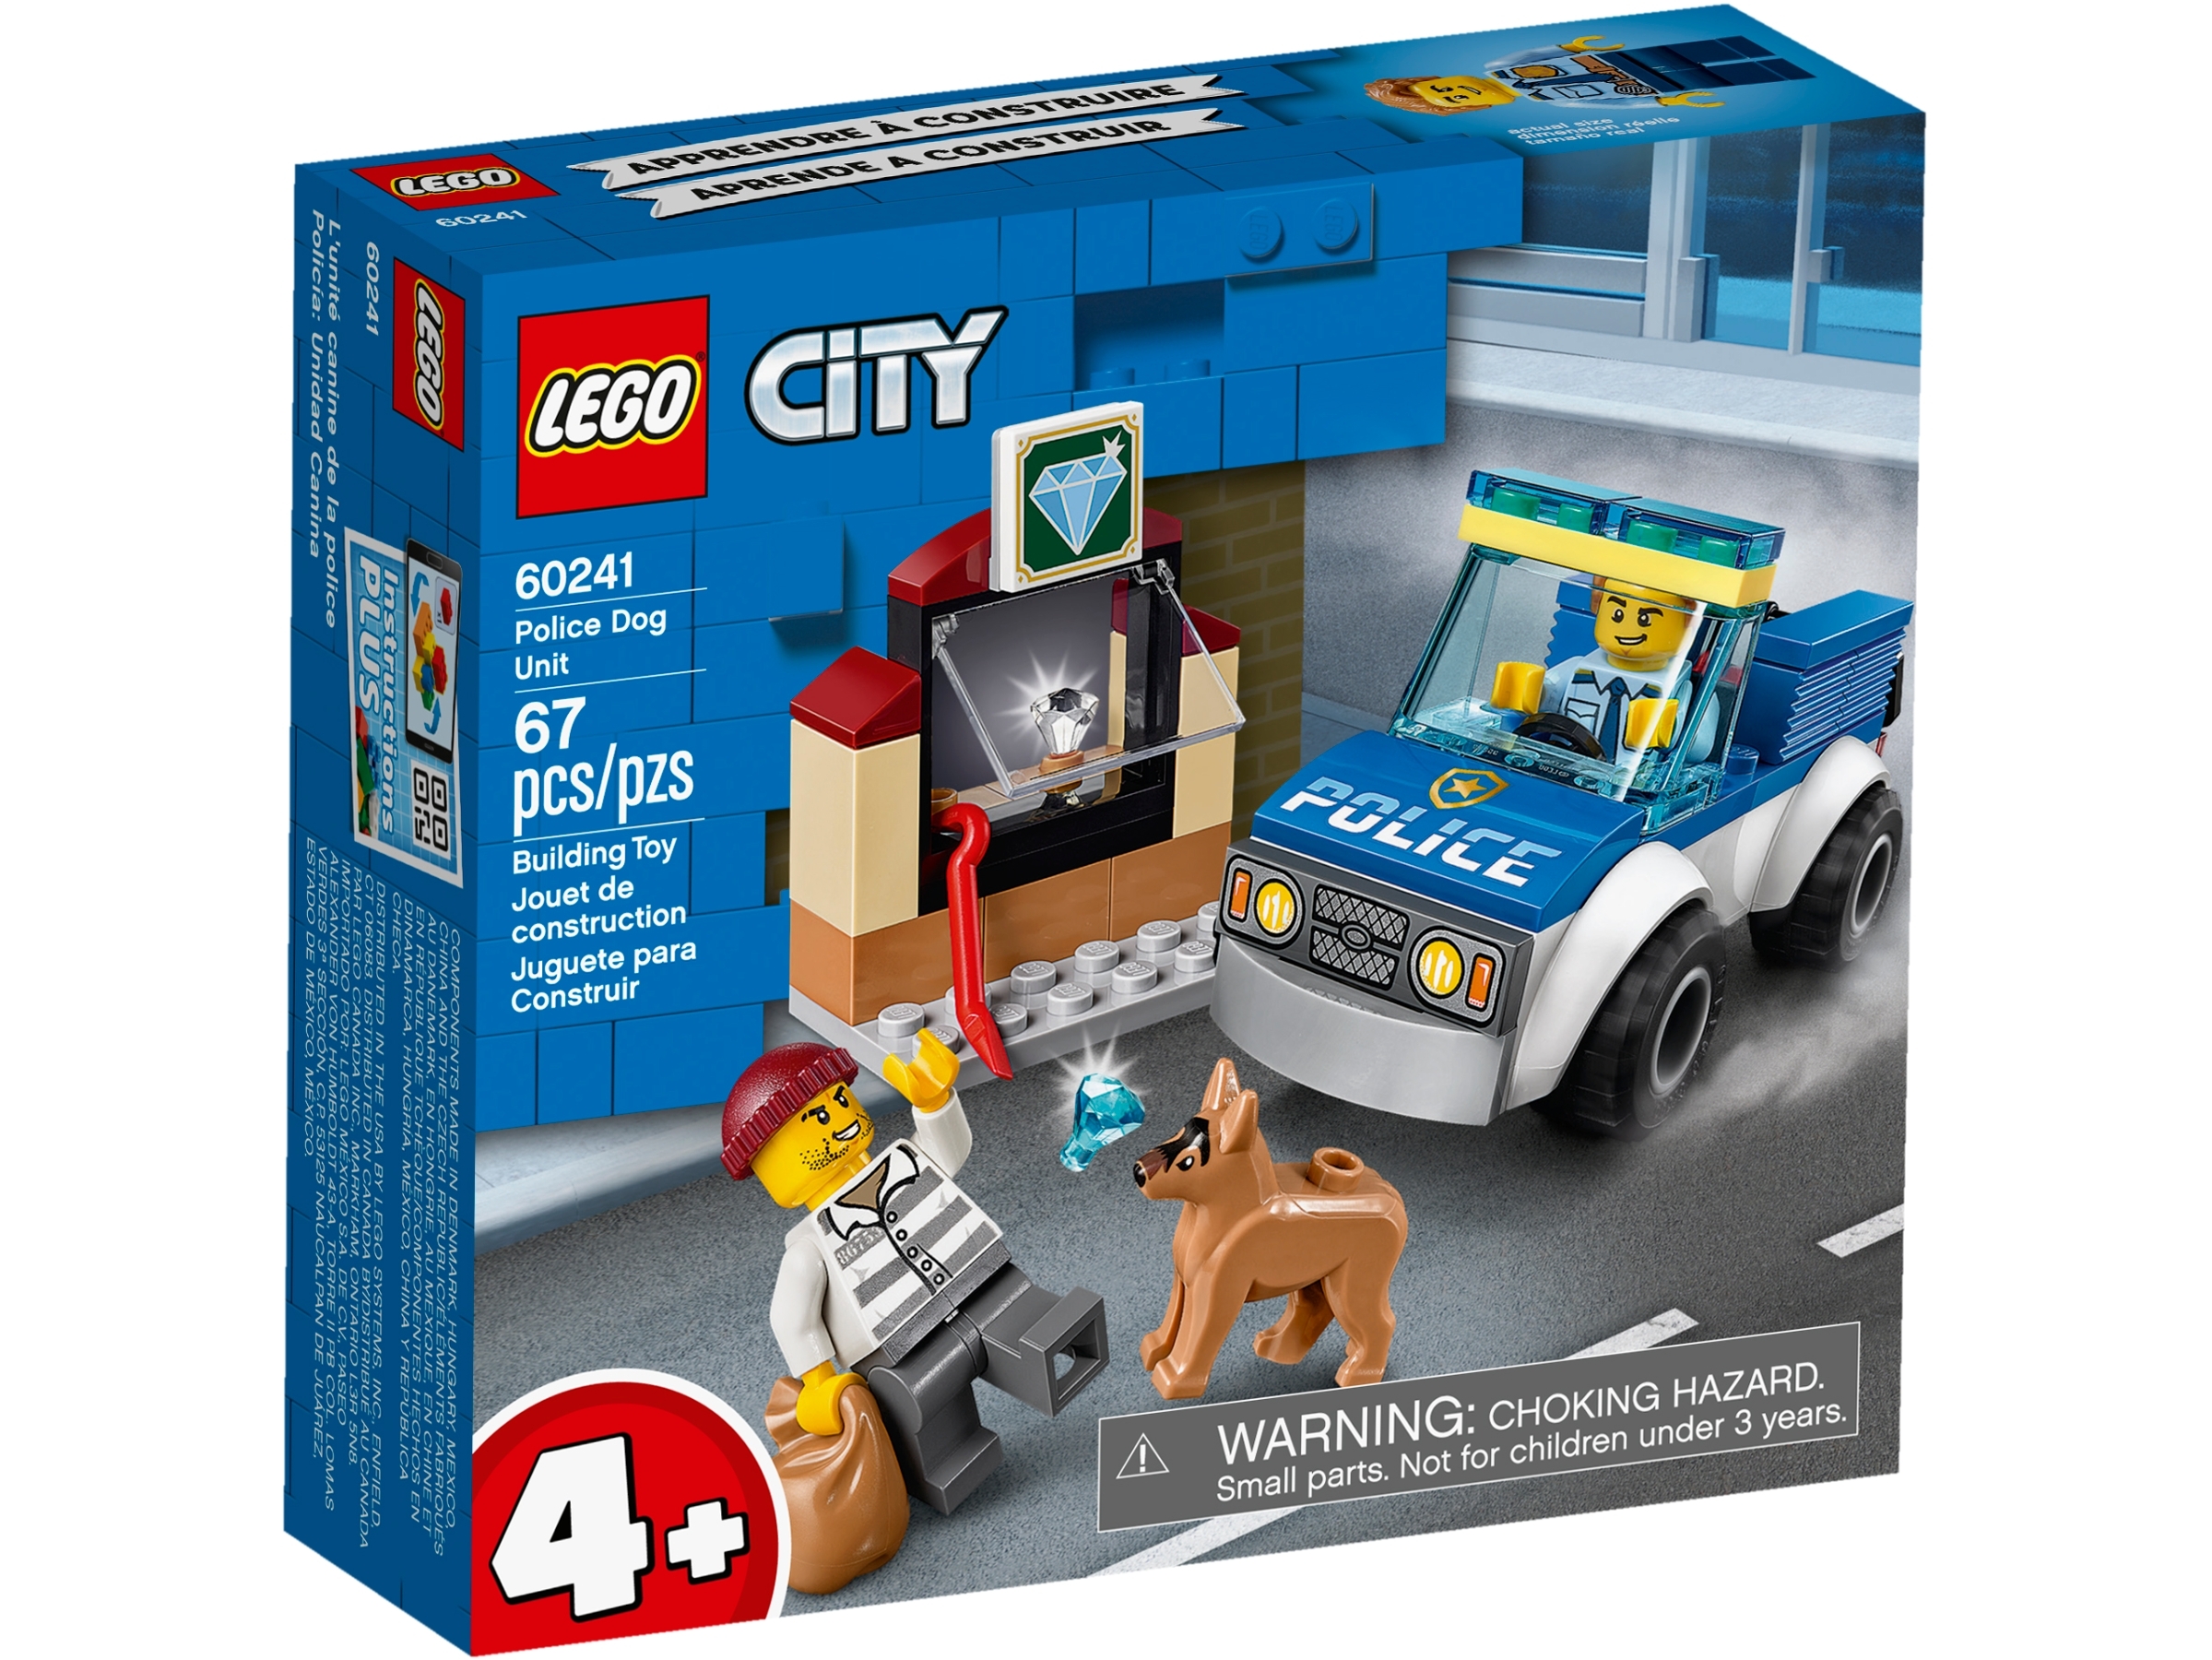 lego city small sets